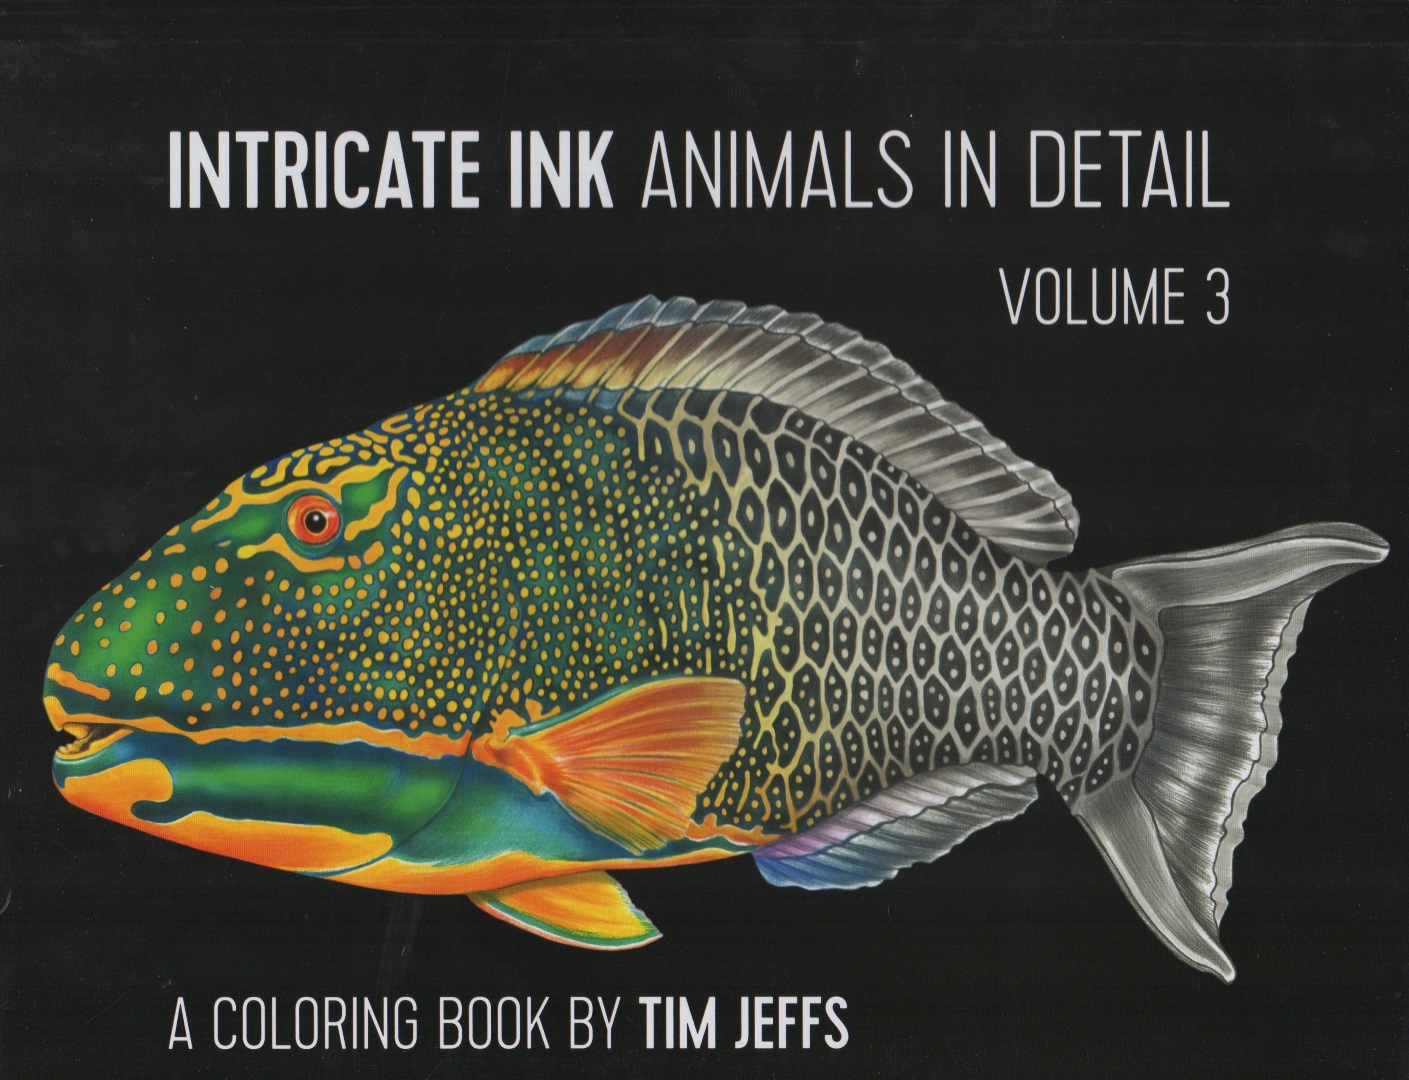 Intricate Ink Animals in Detail Volume 3